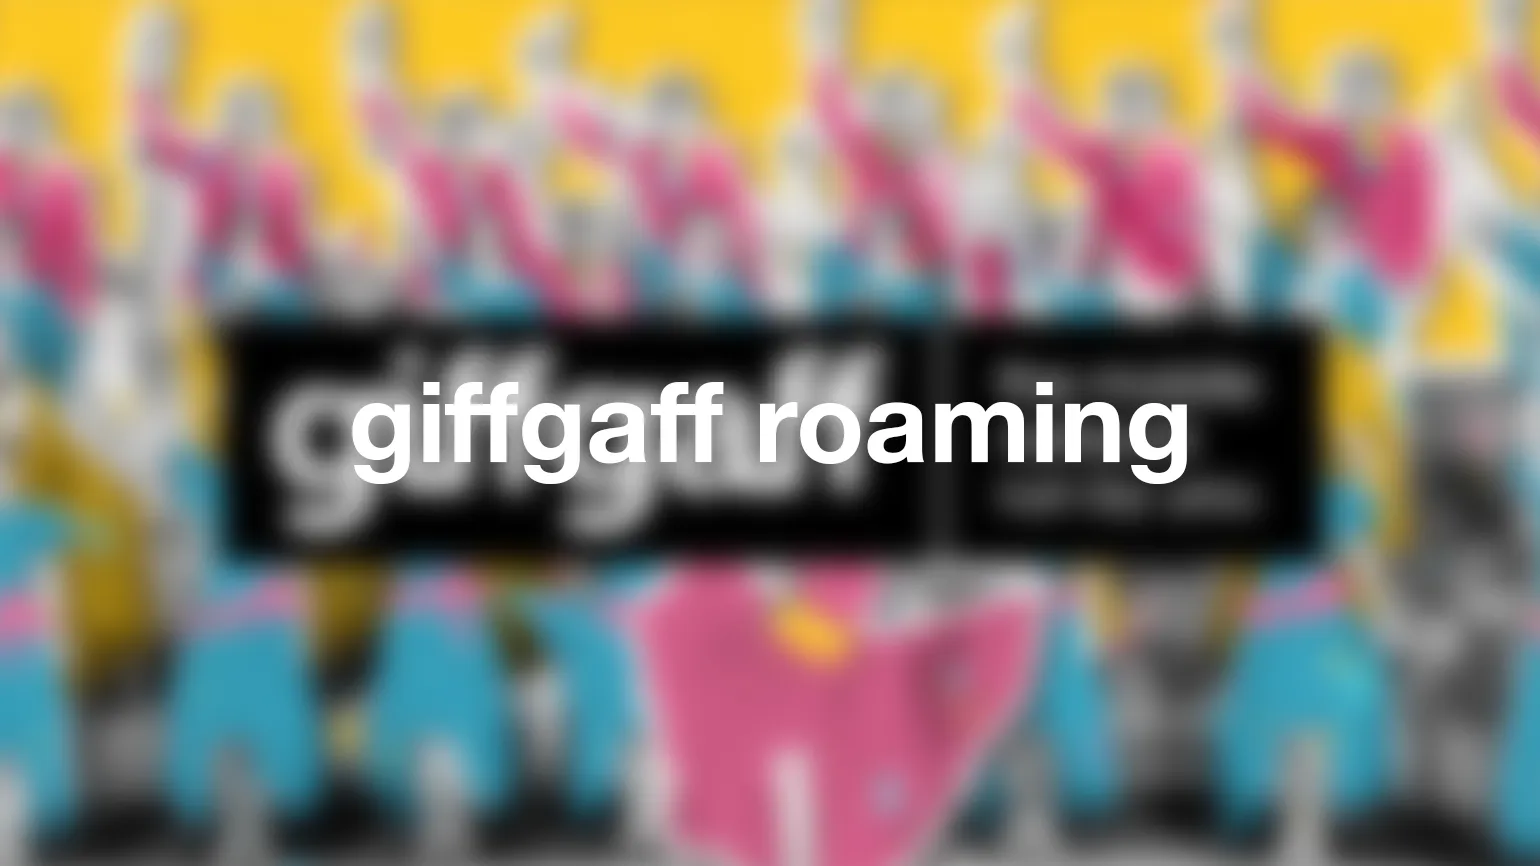 giffgaff roaming - International roaming with giffgaff explained